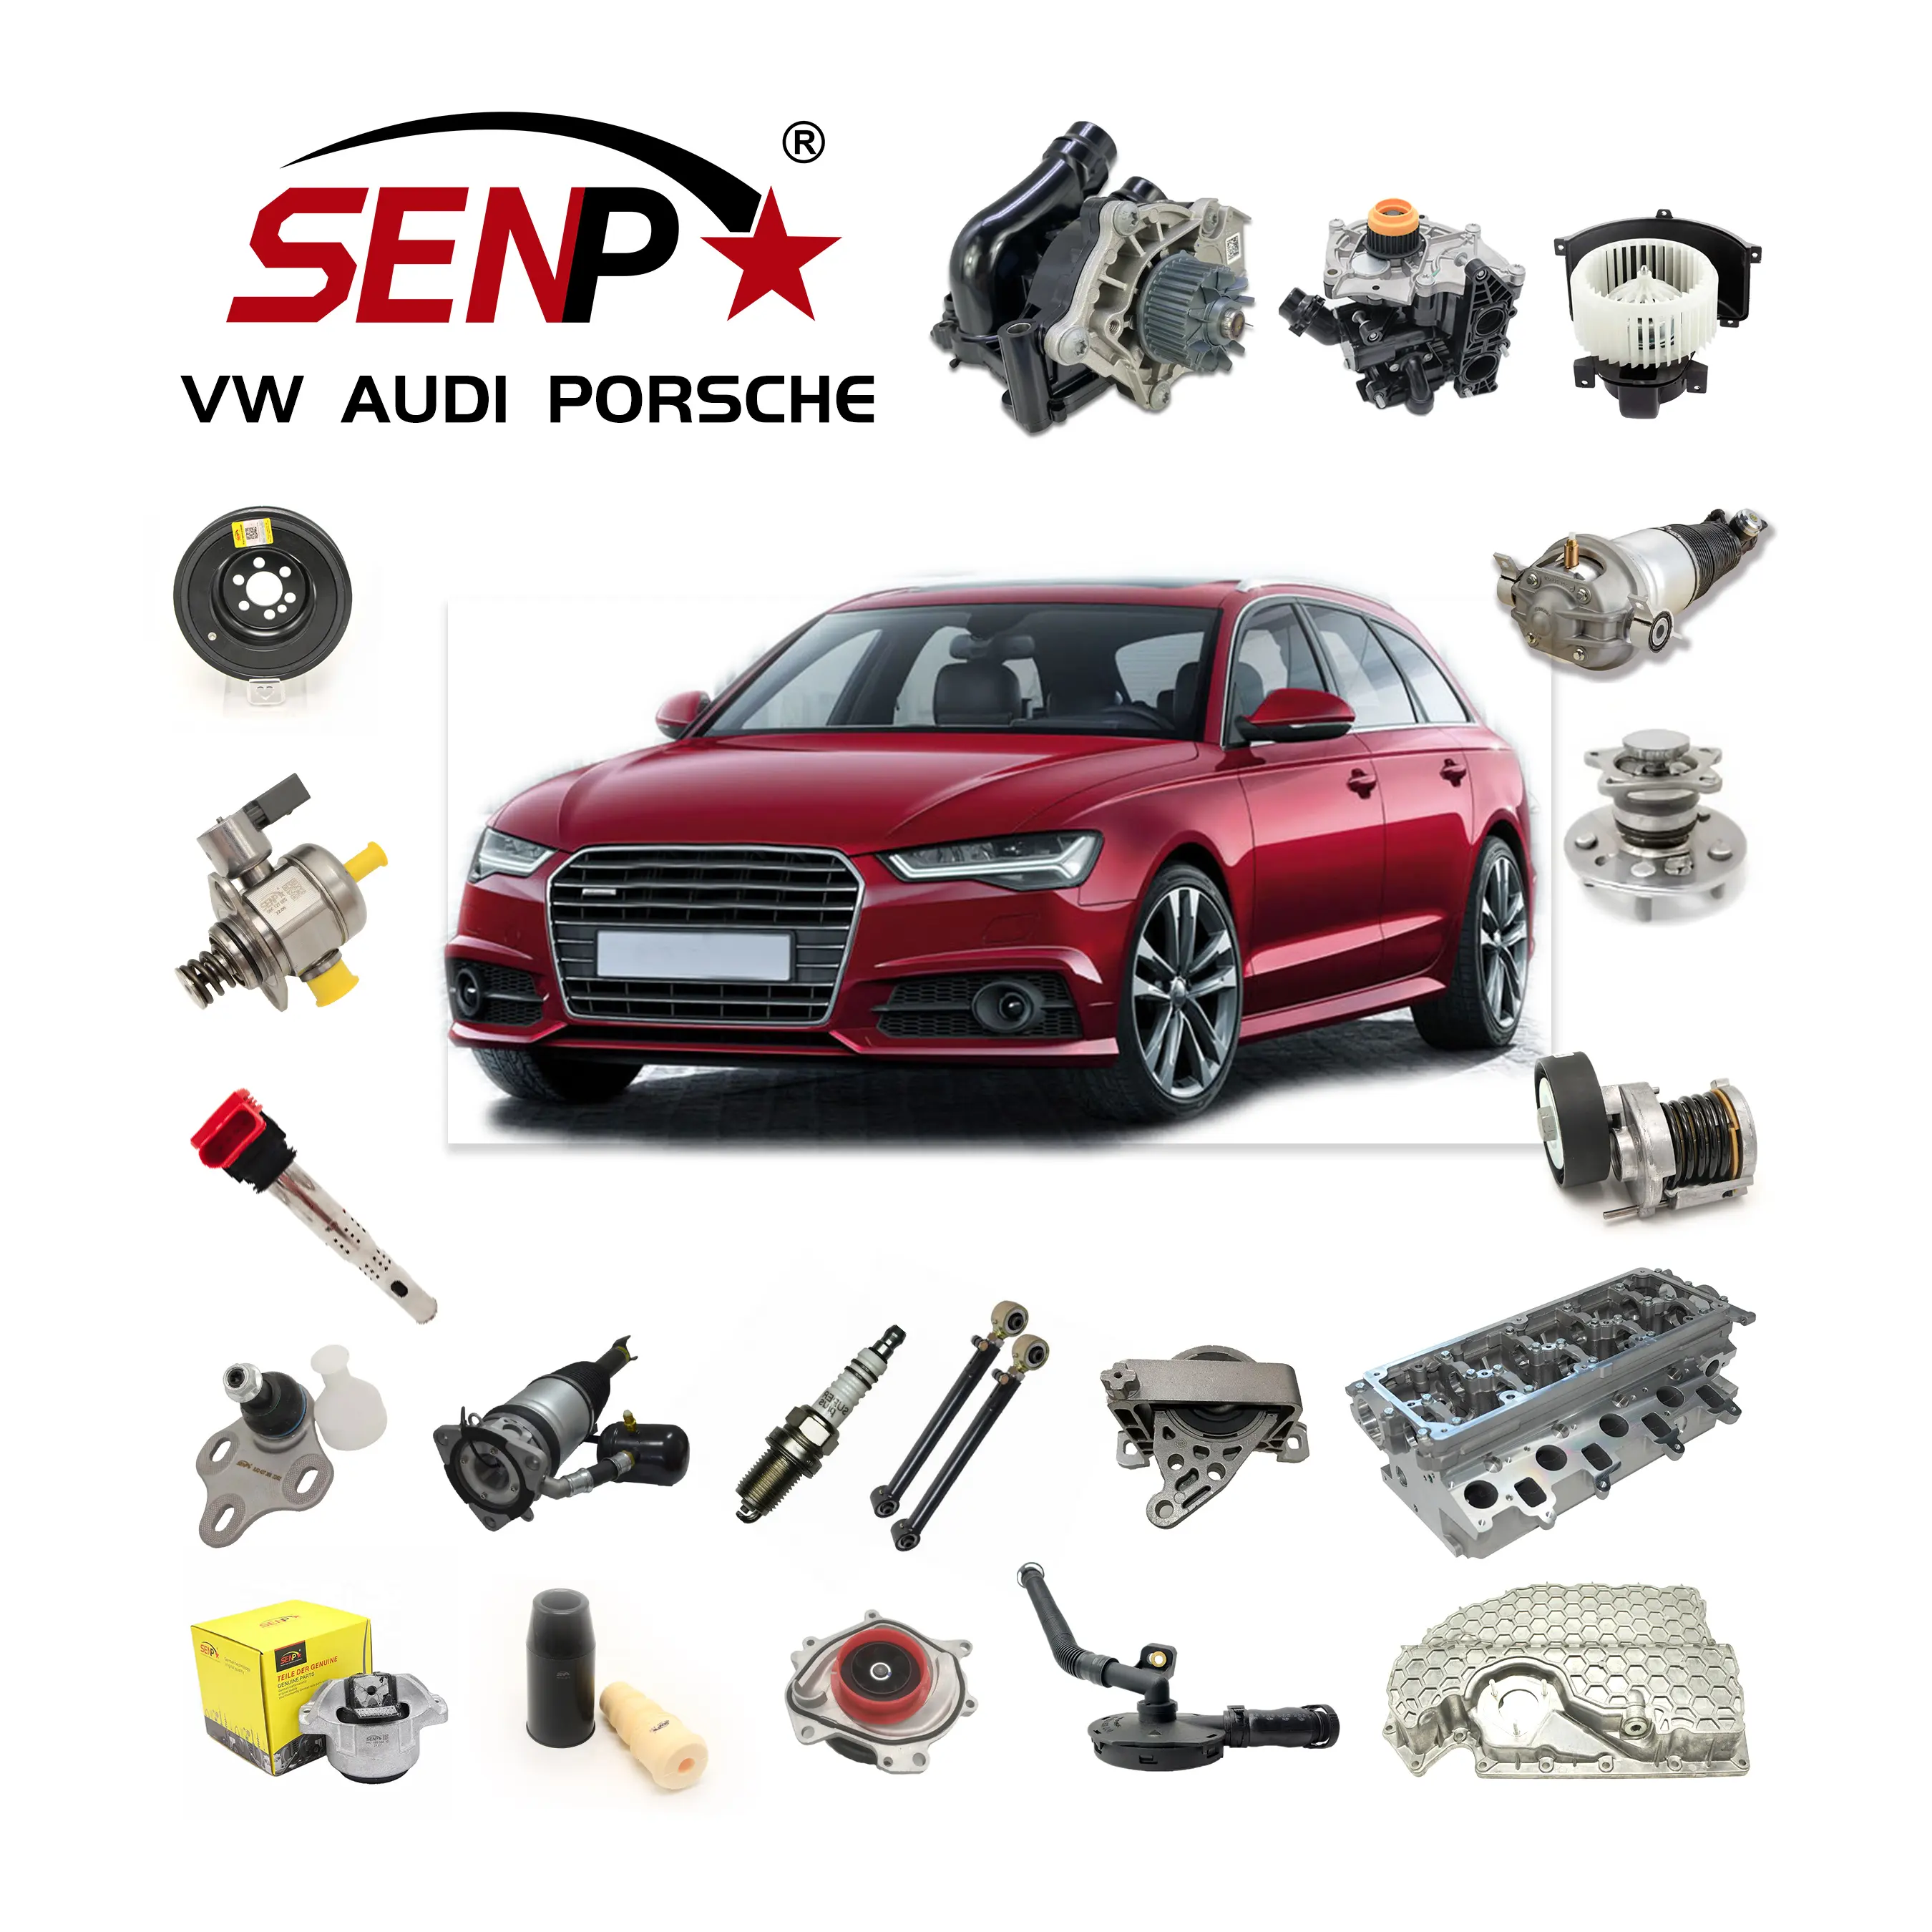 Senp 자동 차 부속 판매인 자동 AUDI VW 포르쉐를 위한 다른 예비 품목 독일 차 부속품 모든 모형 부속 자신의 상표